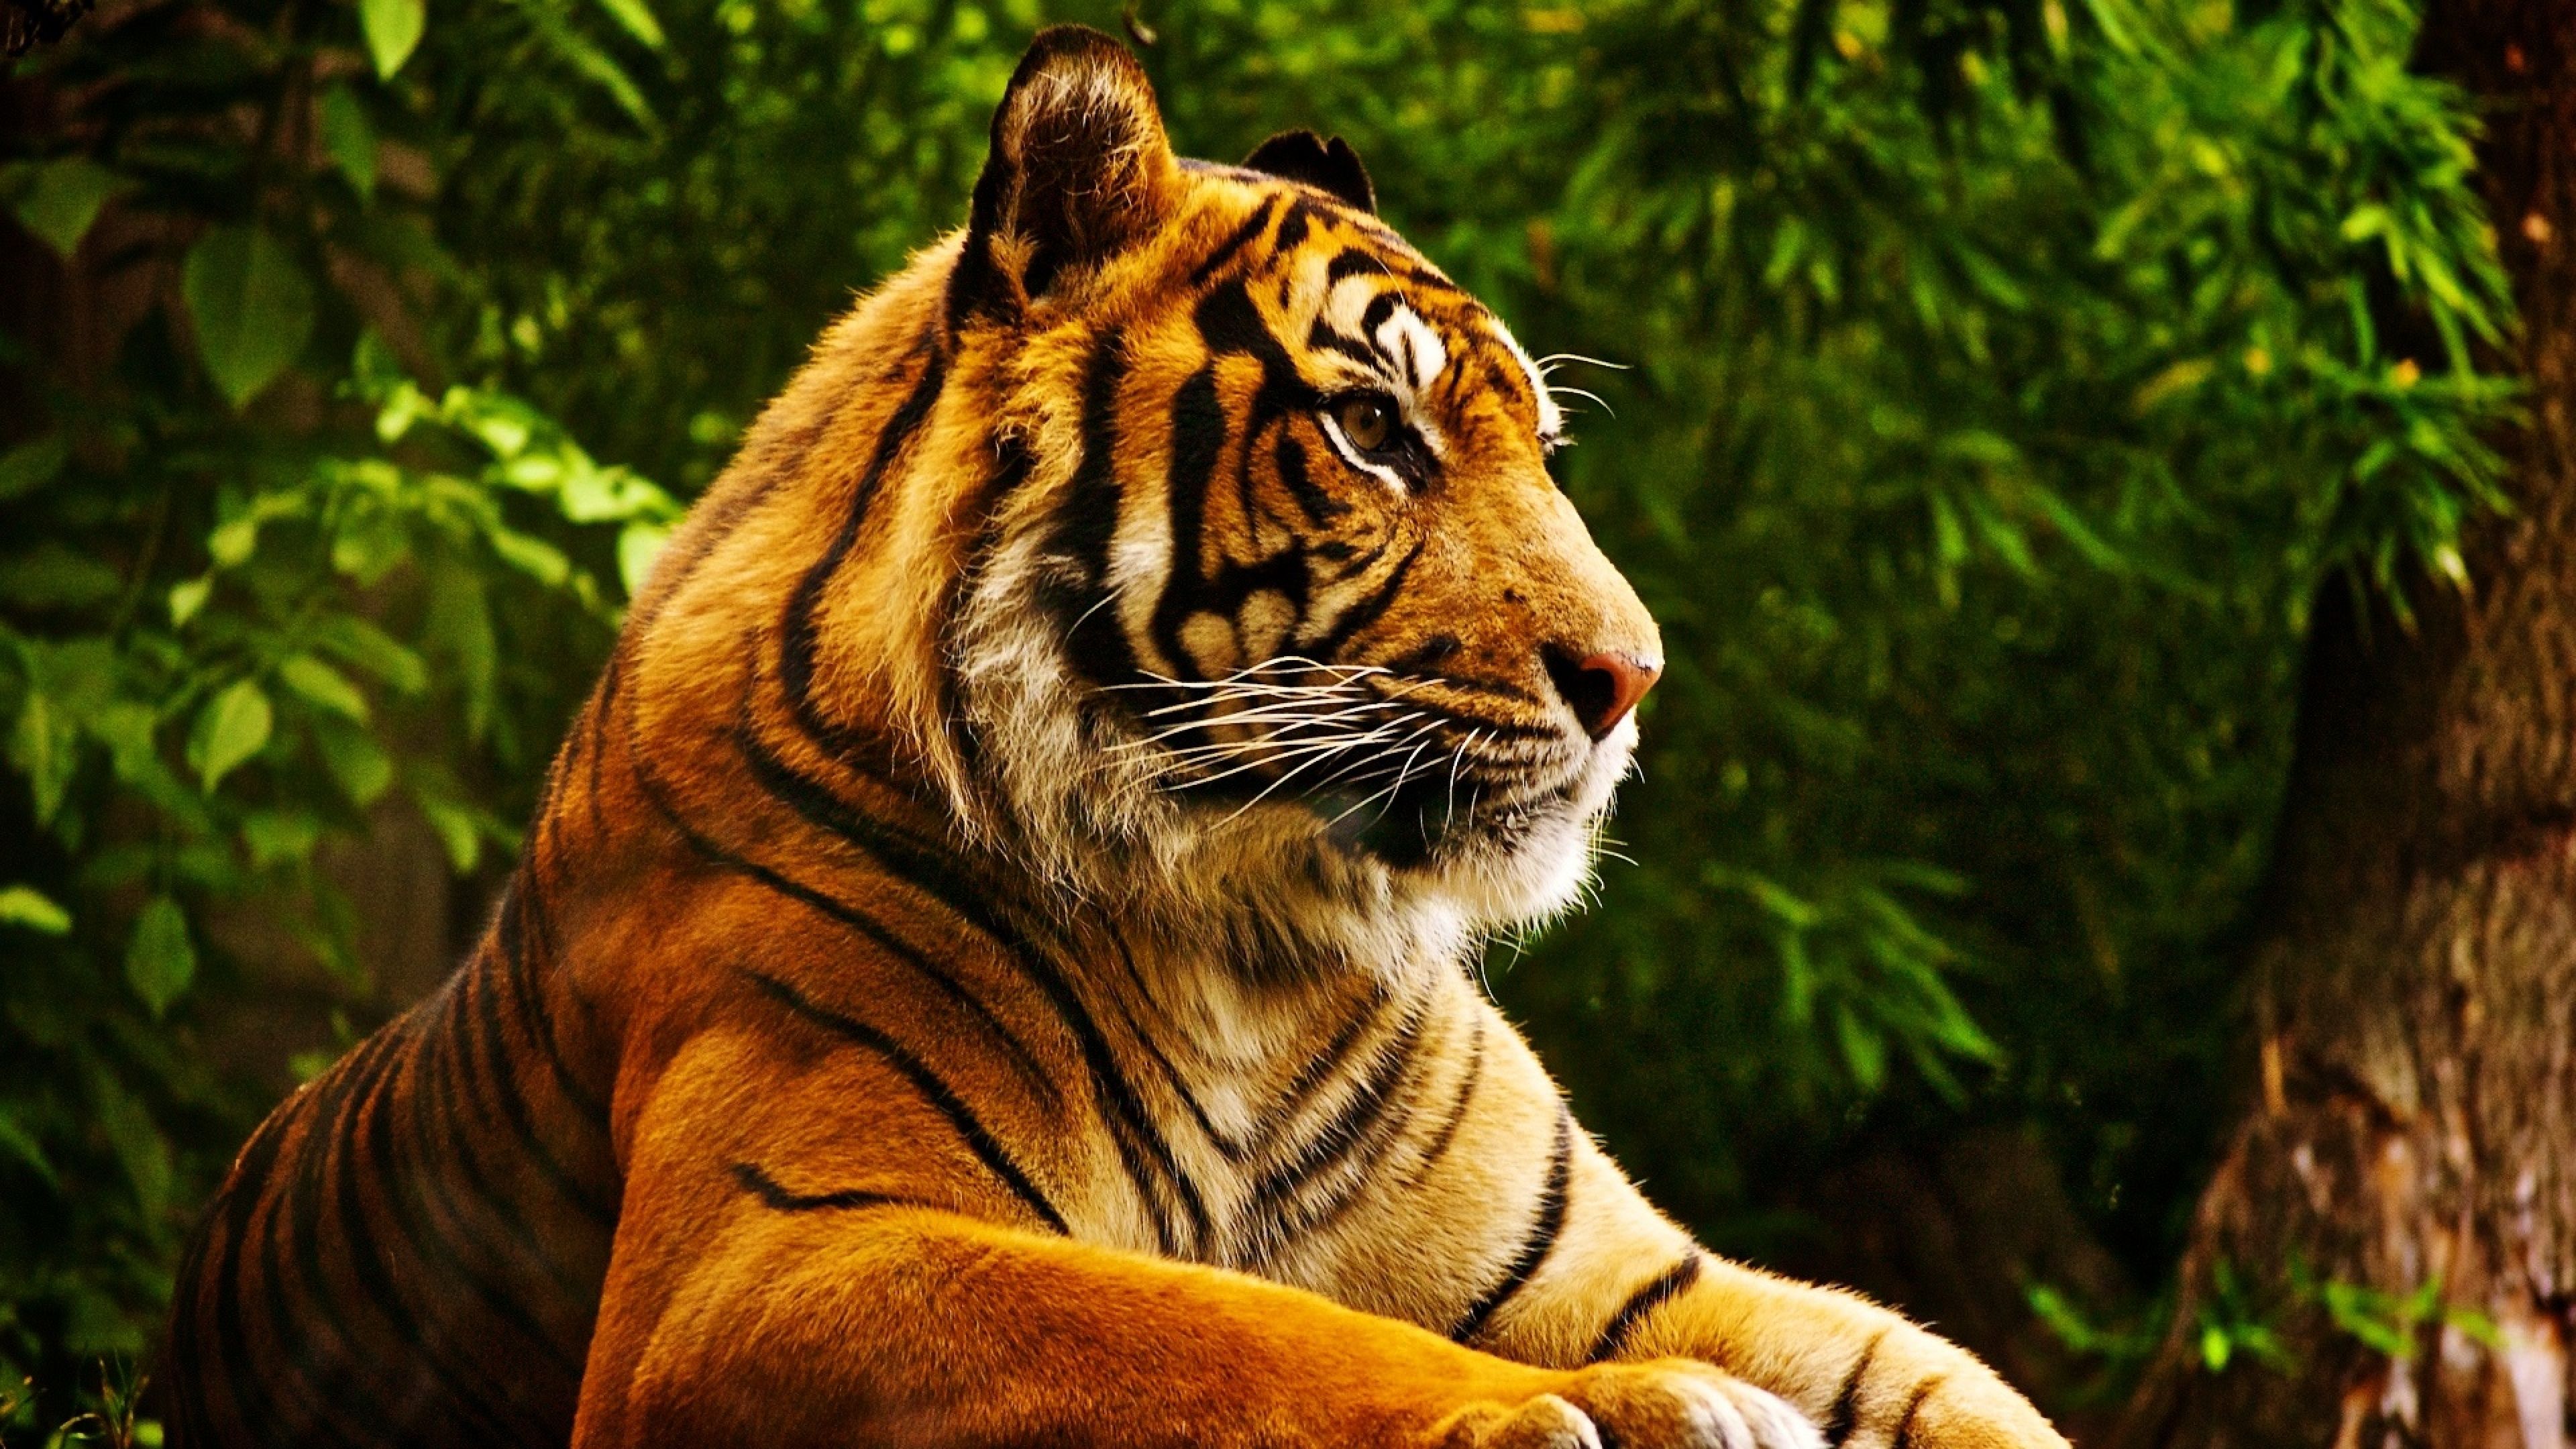 Tiger 4k Ultra HD Wallpaper Background Image Id